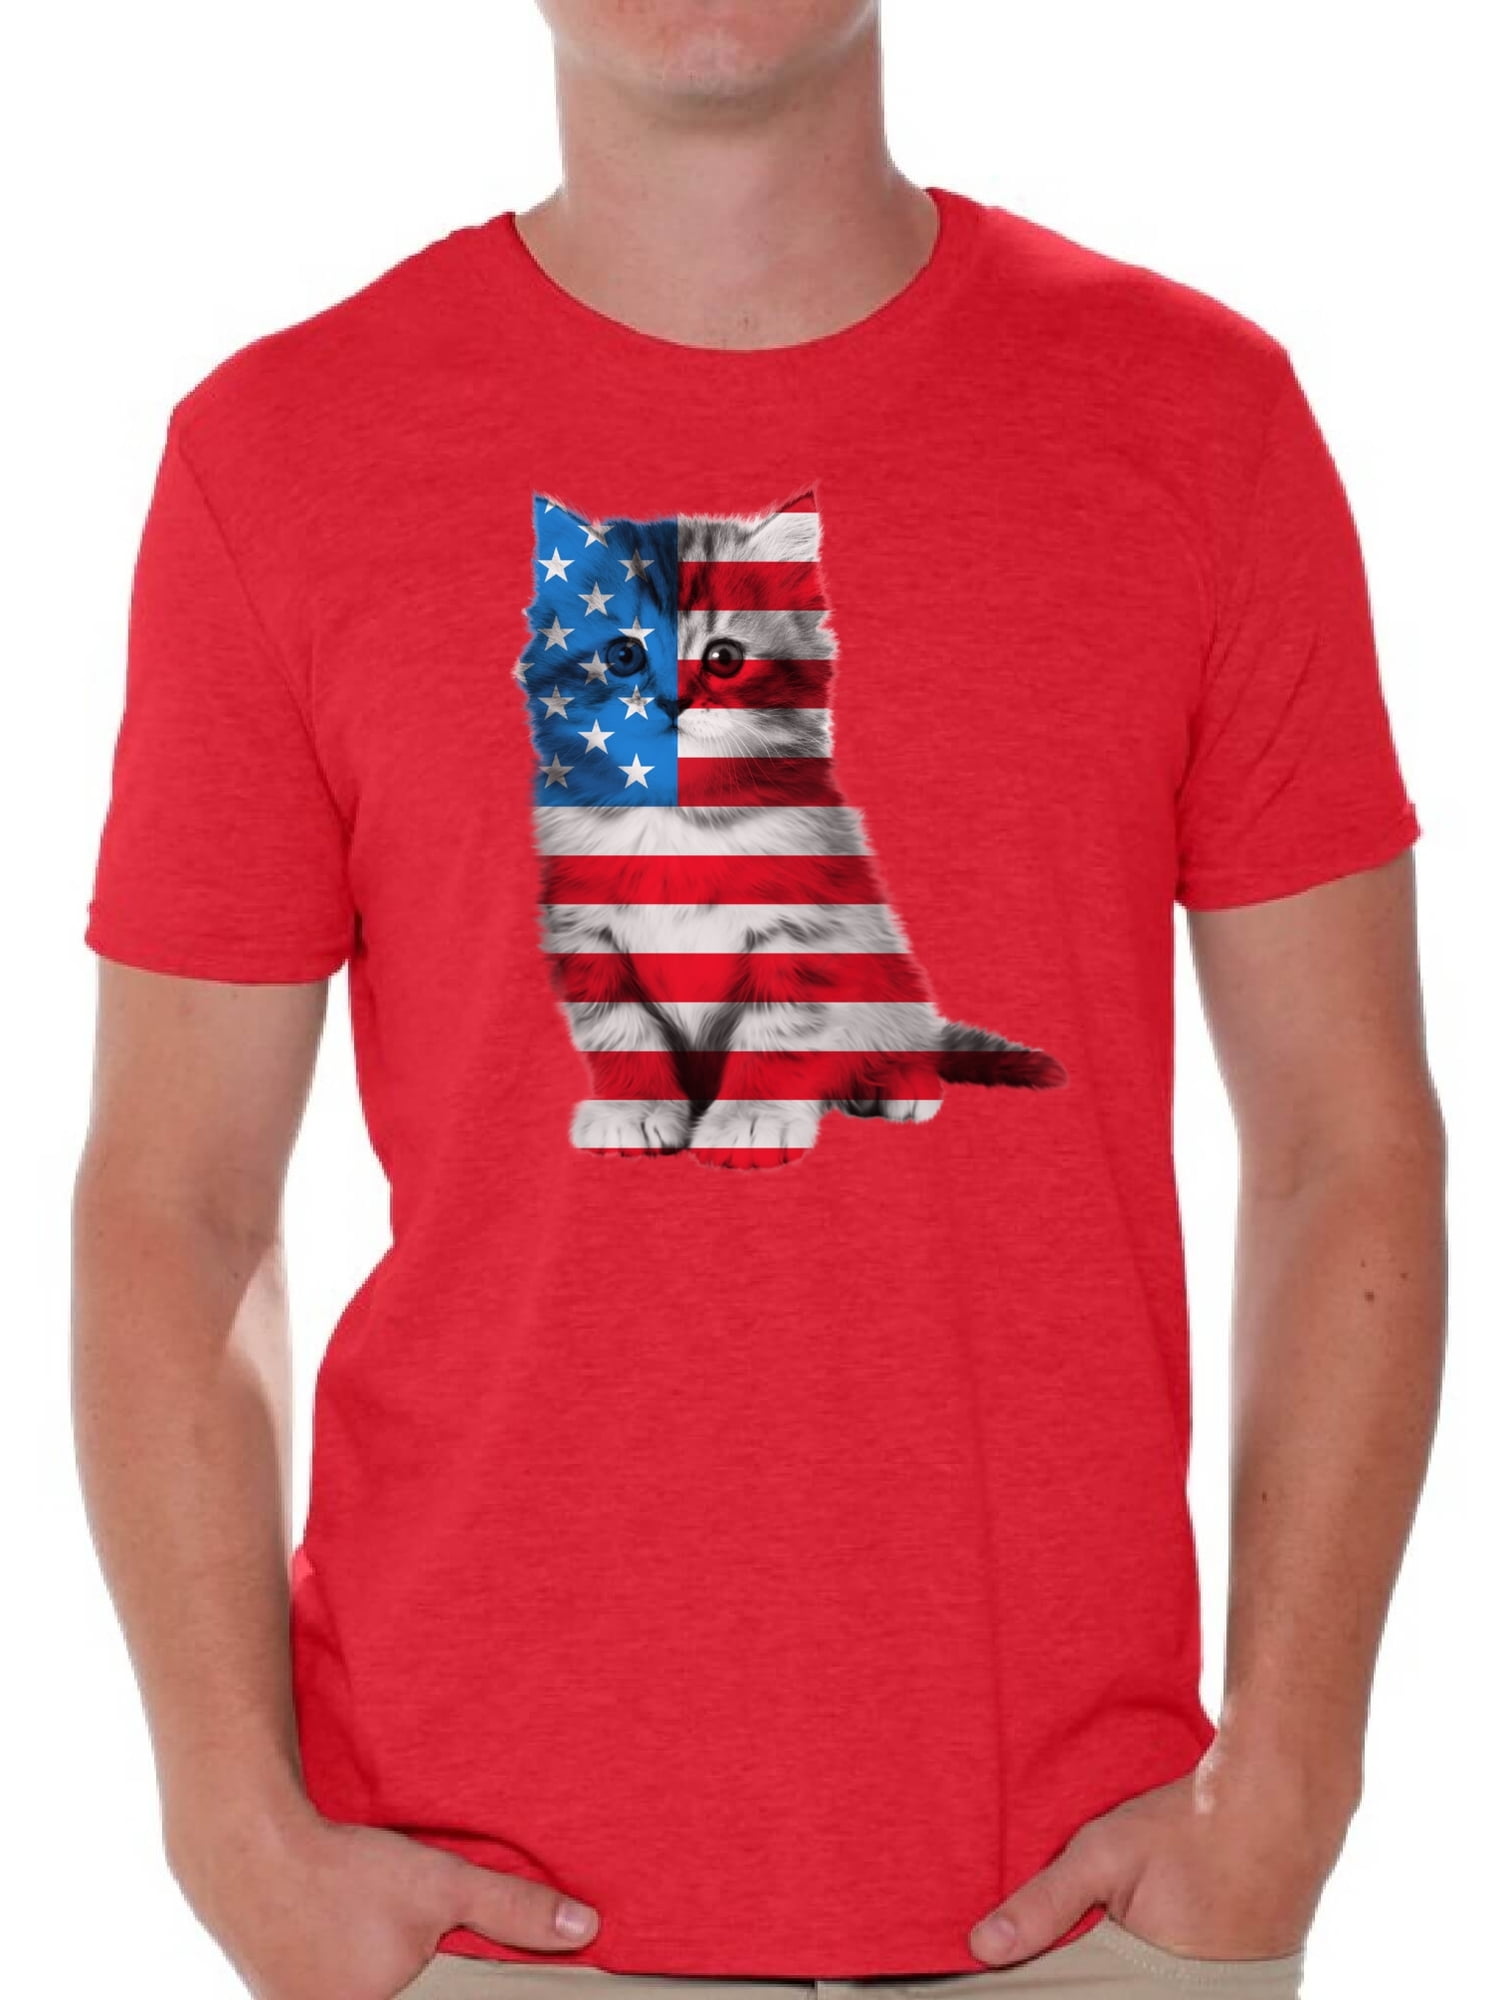 Awkward Styles Cat Shirts Mens USA Flag Patriotic Graphic Tshirt Tops ...